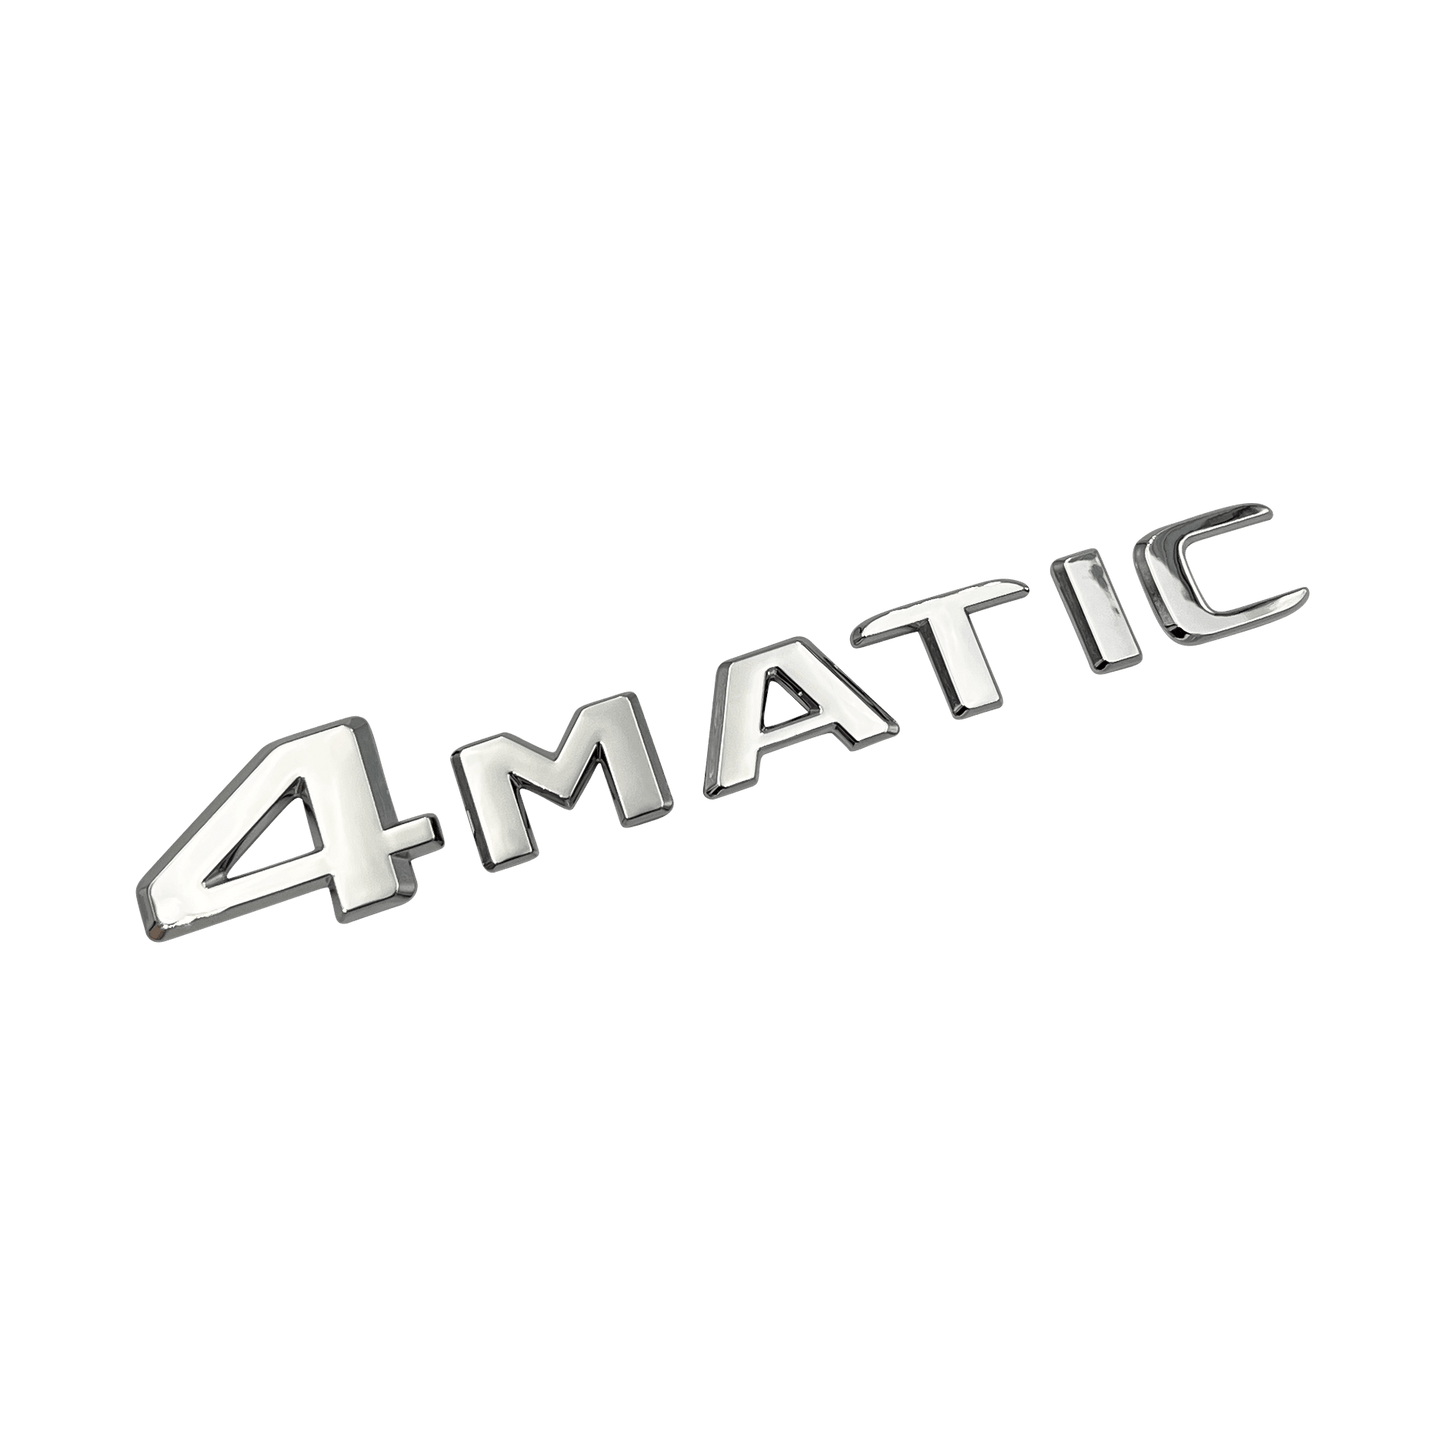 Chrome Mercedes 4-MATIC Emblem